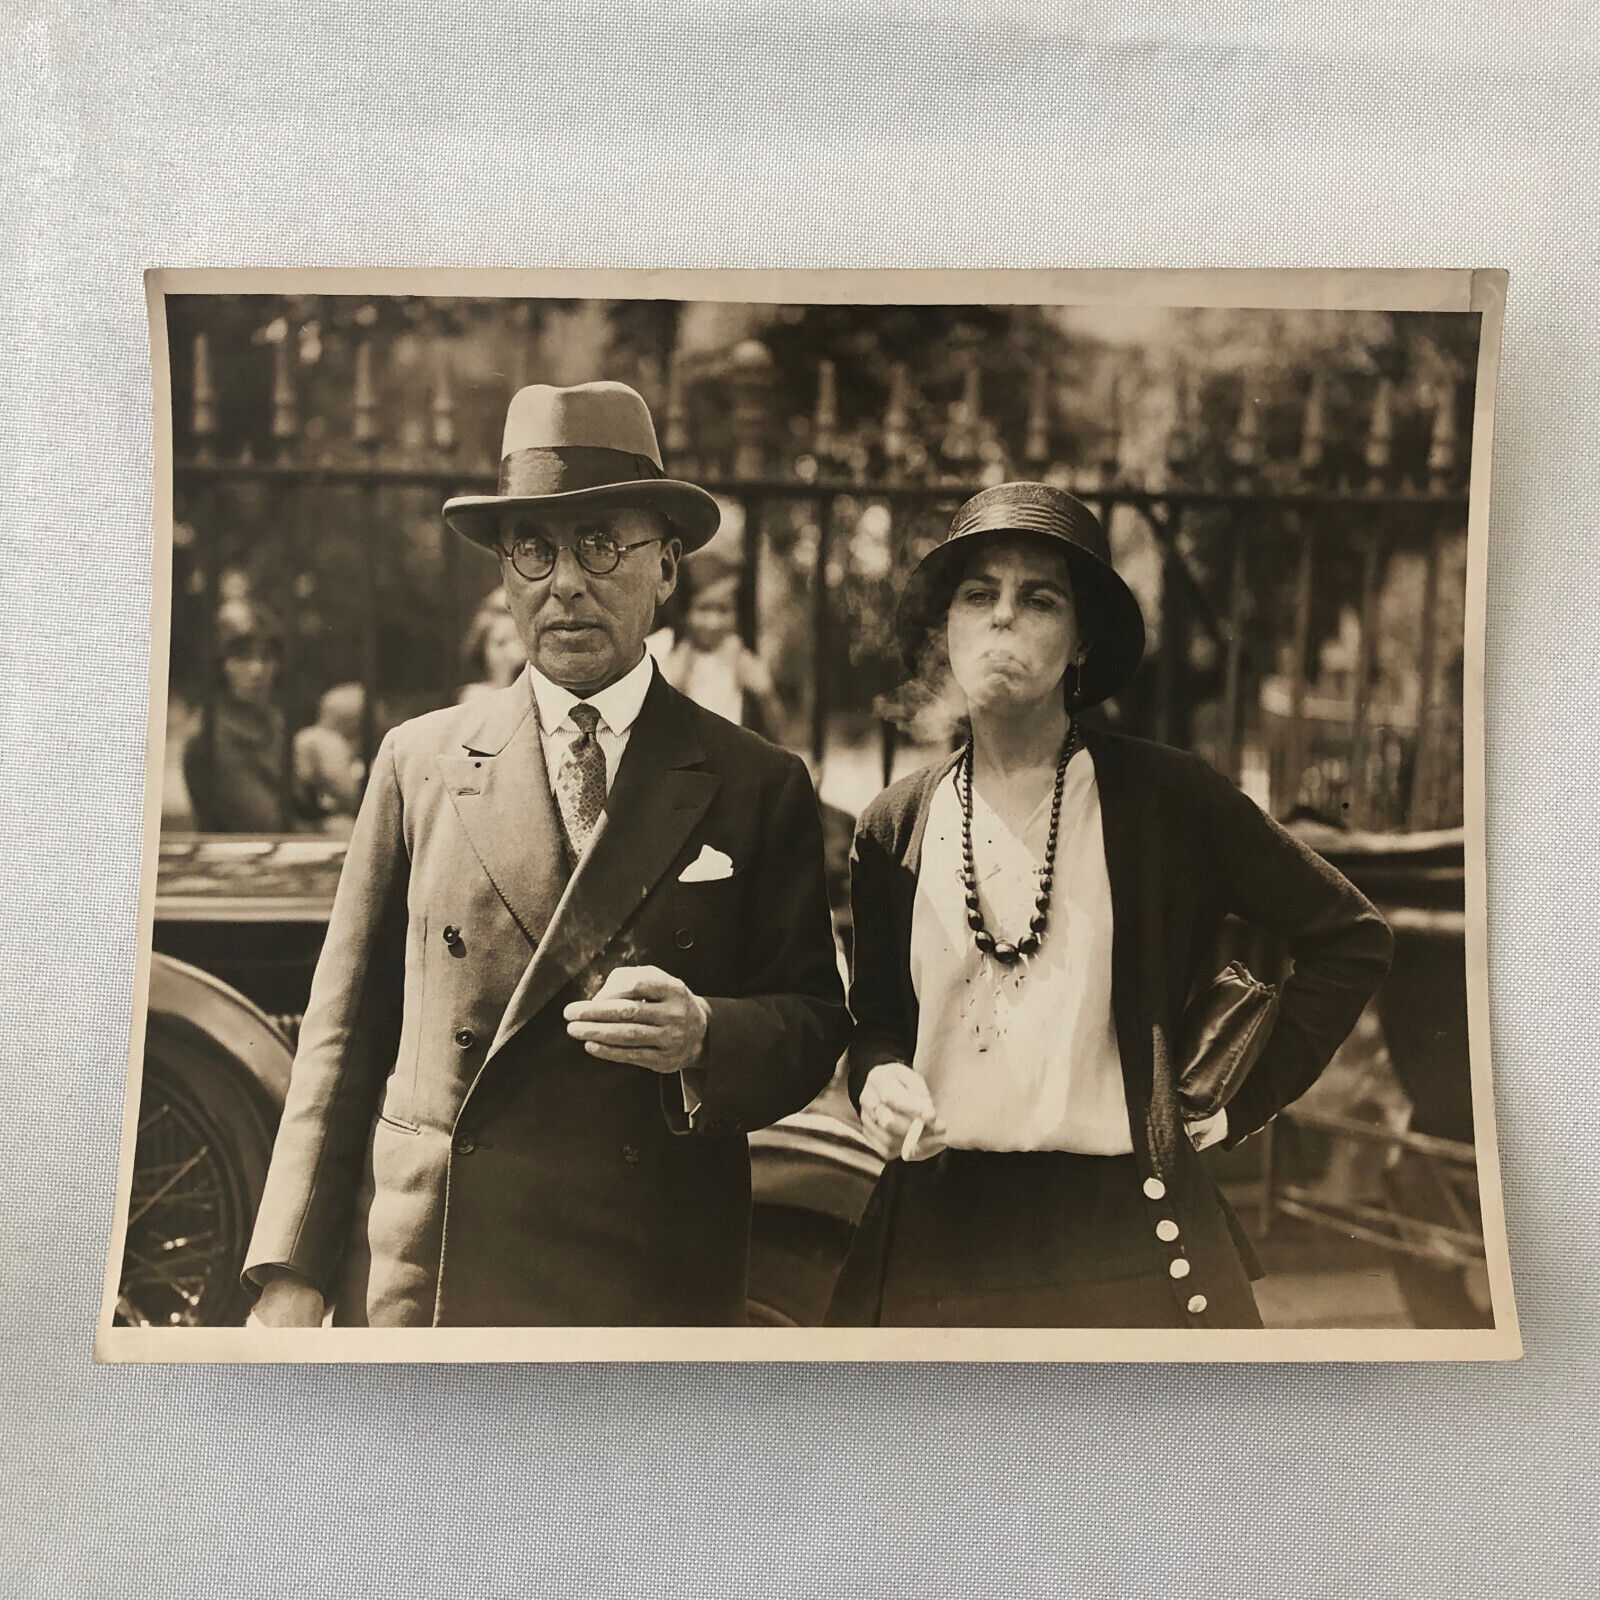 Press Photo Photograph 1933 Smoking Woman Crime Murder Investigation LNA